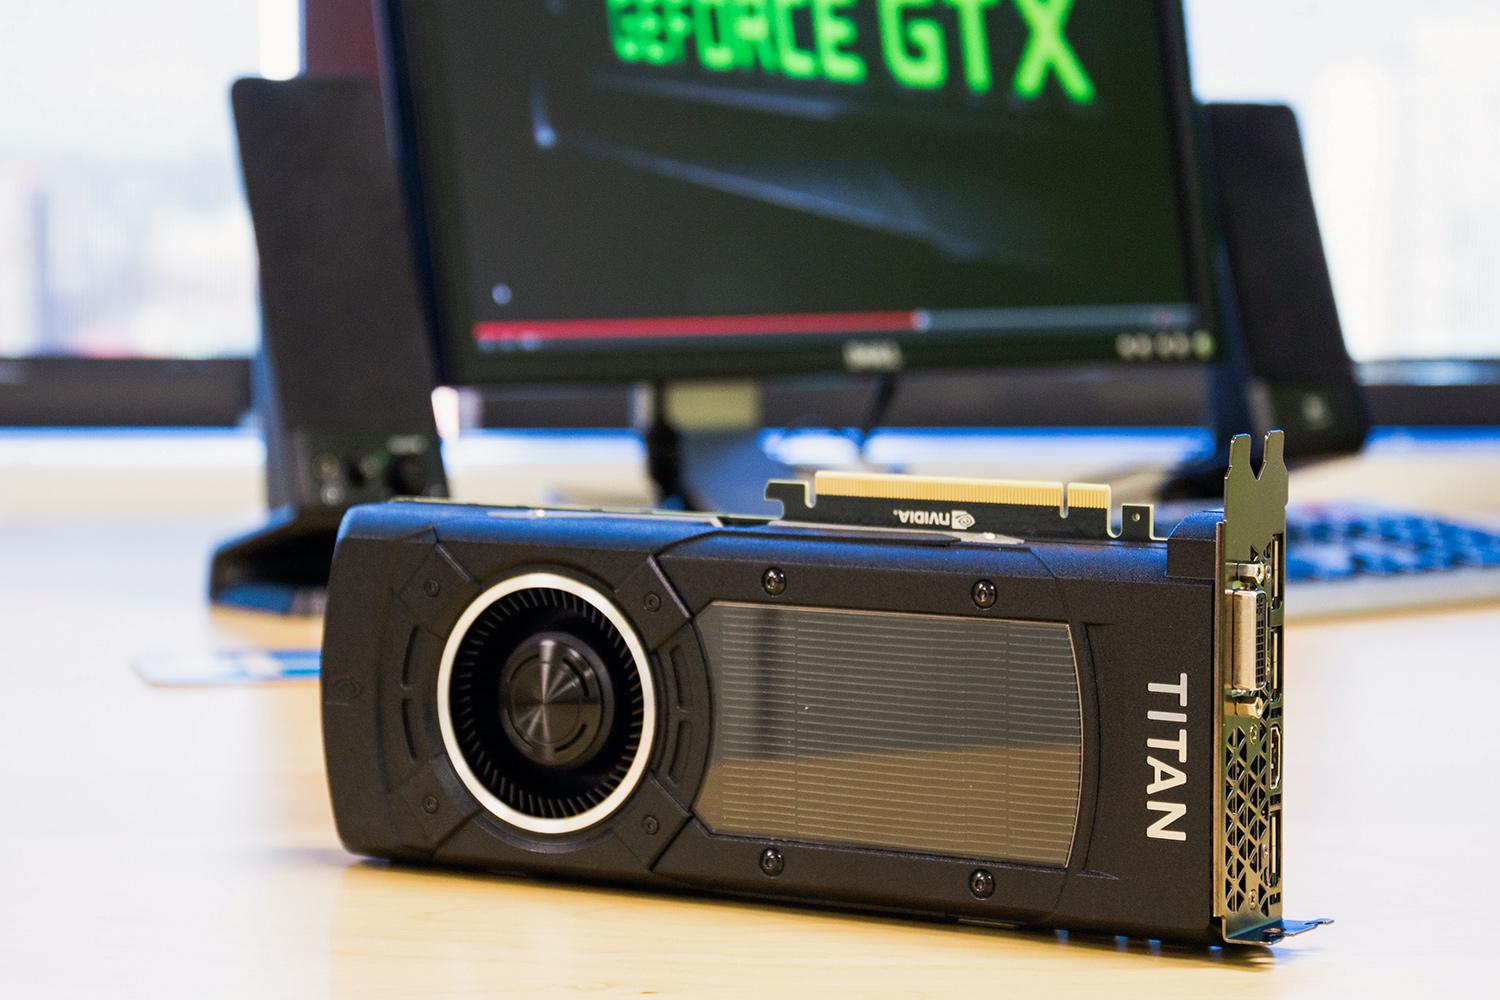 Nvidia GeForce GTX Titan X Review (Page 22)